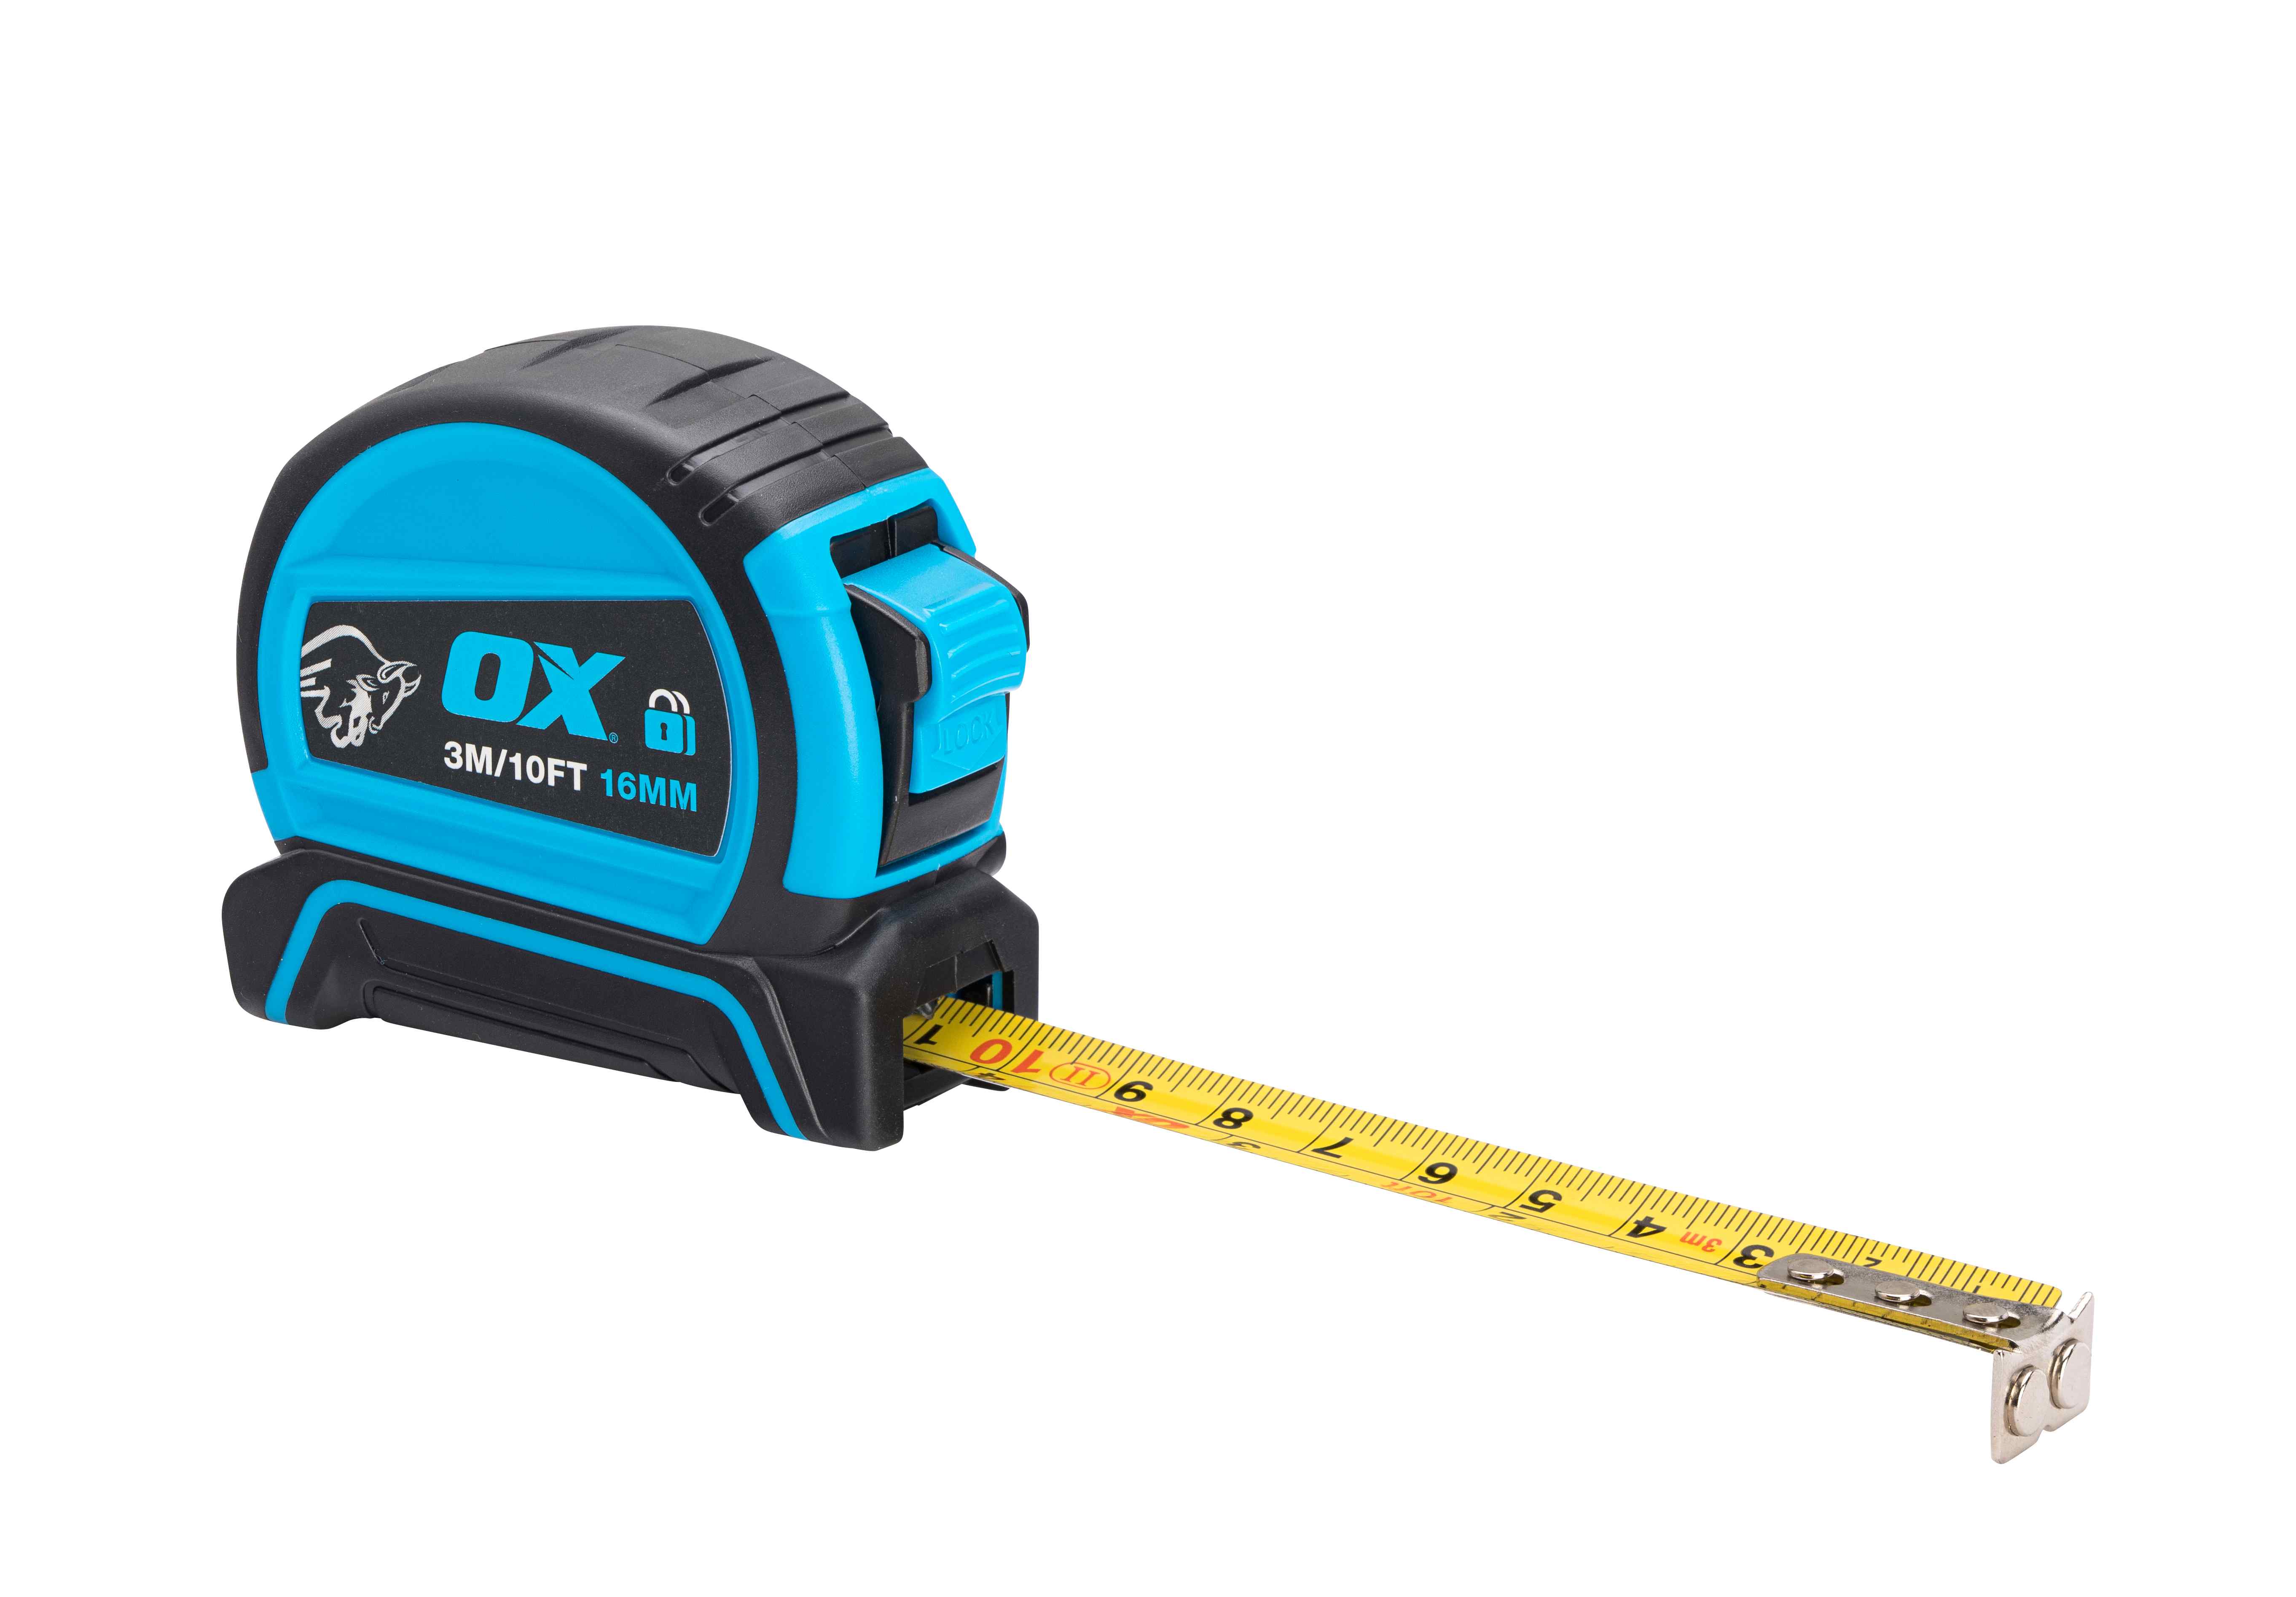 OX Pro Dual Auto Lock Tape Measure - 3m